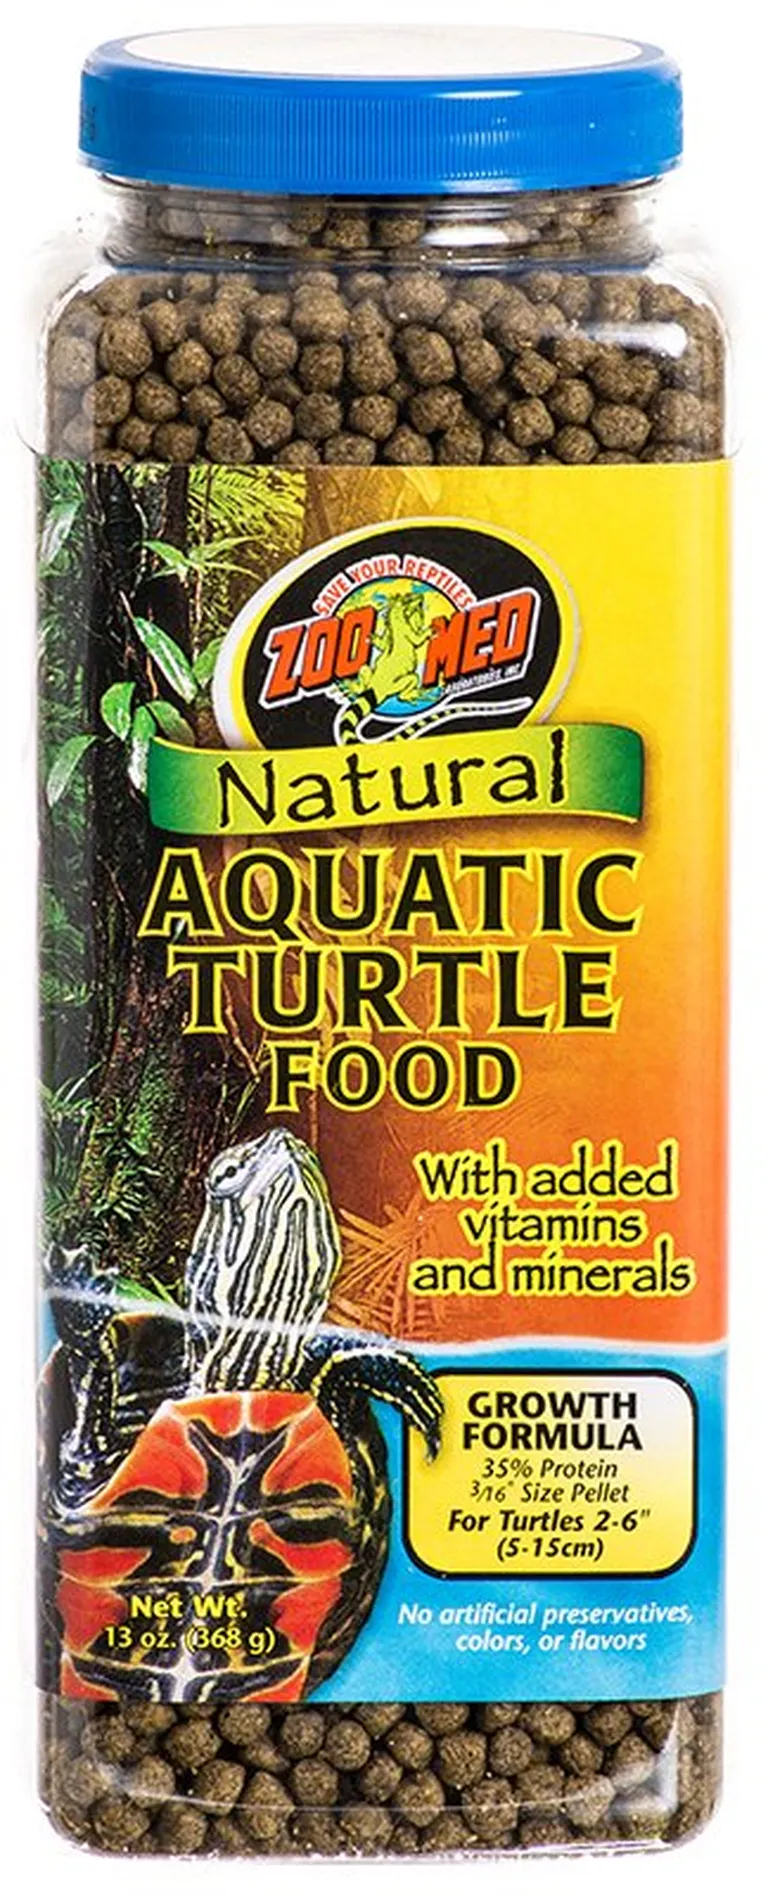 Zoo Med Natural Aquatic Turtle Food Growth Formula Photo 1